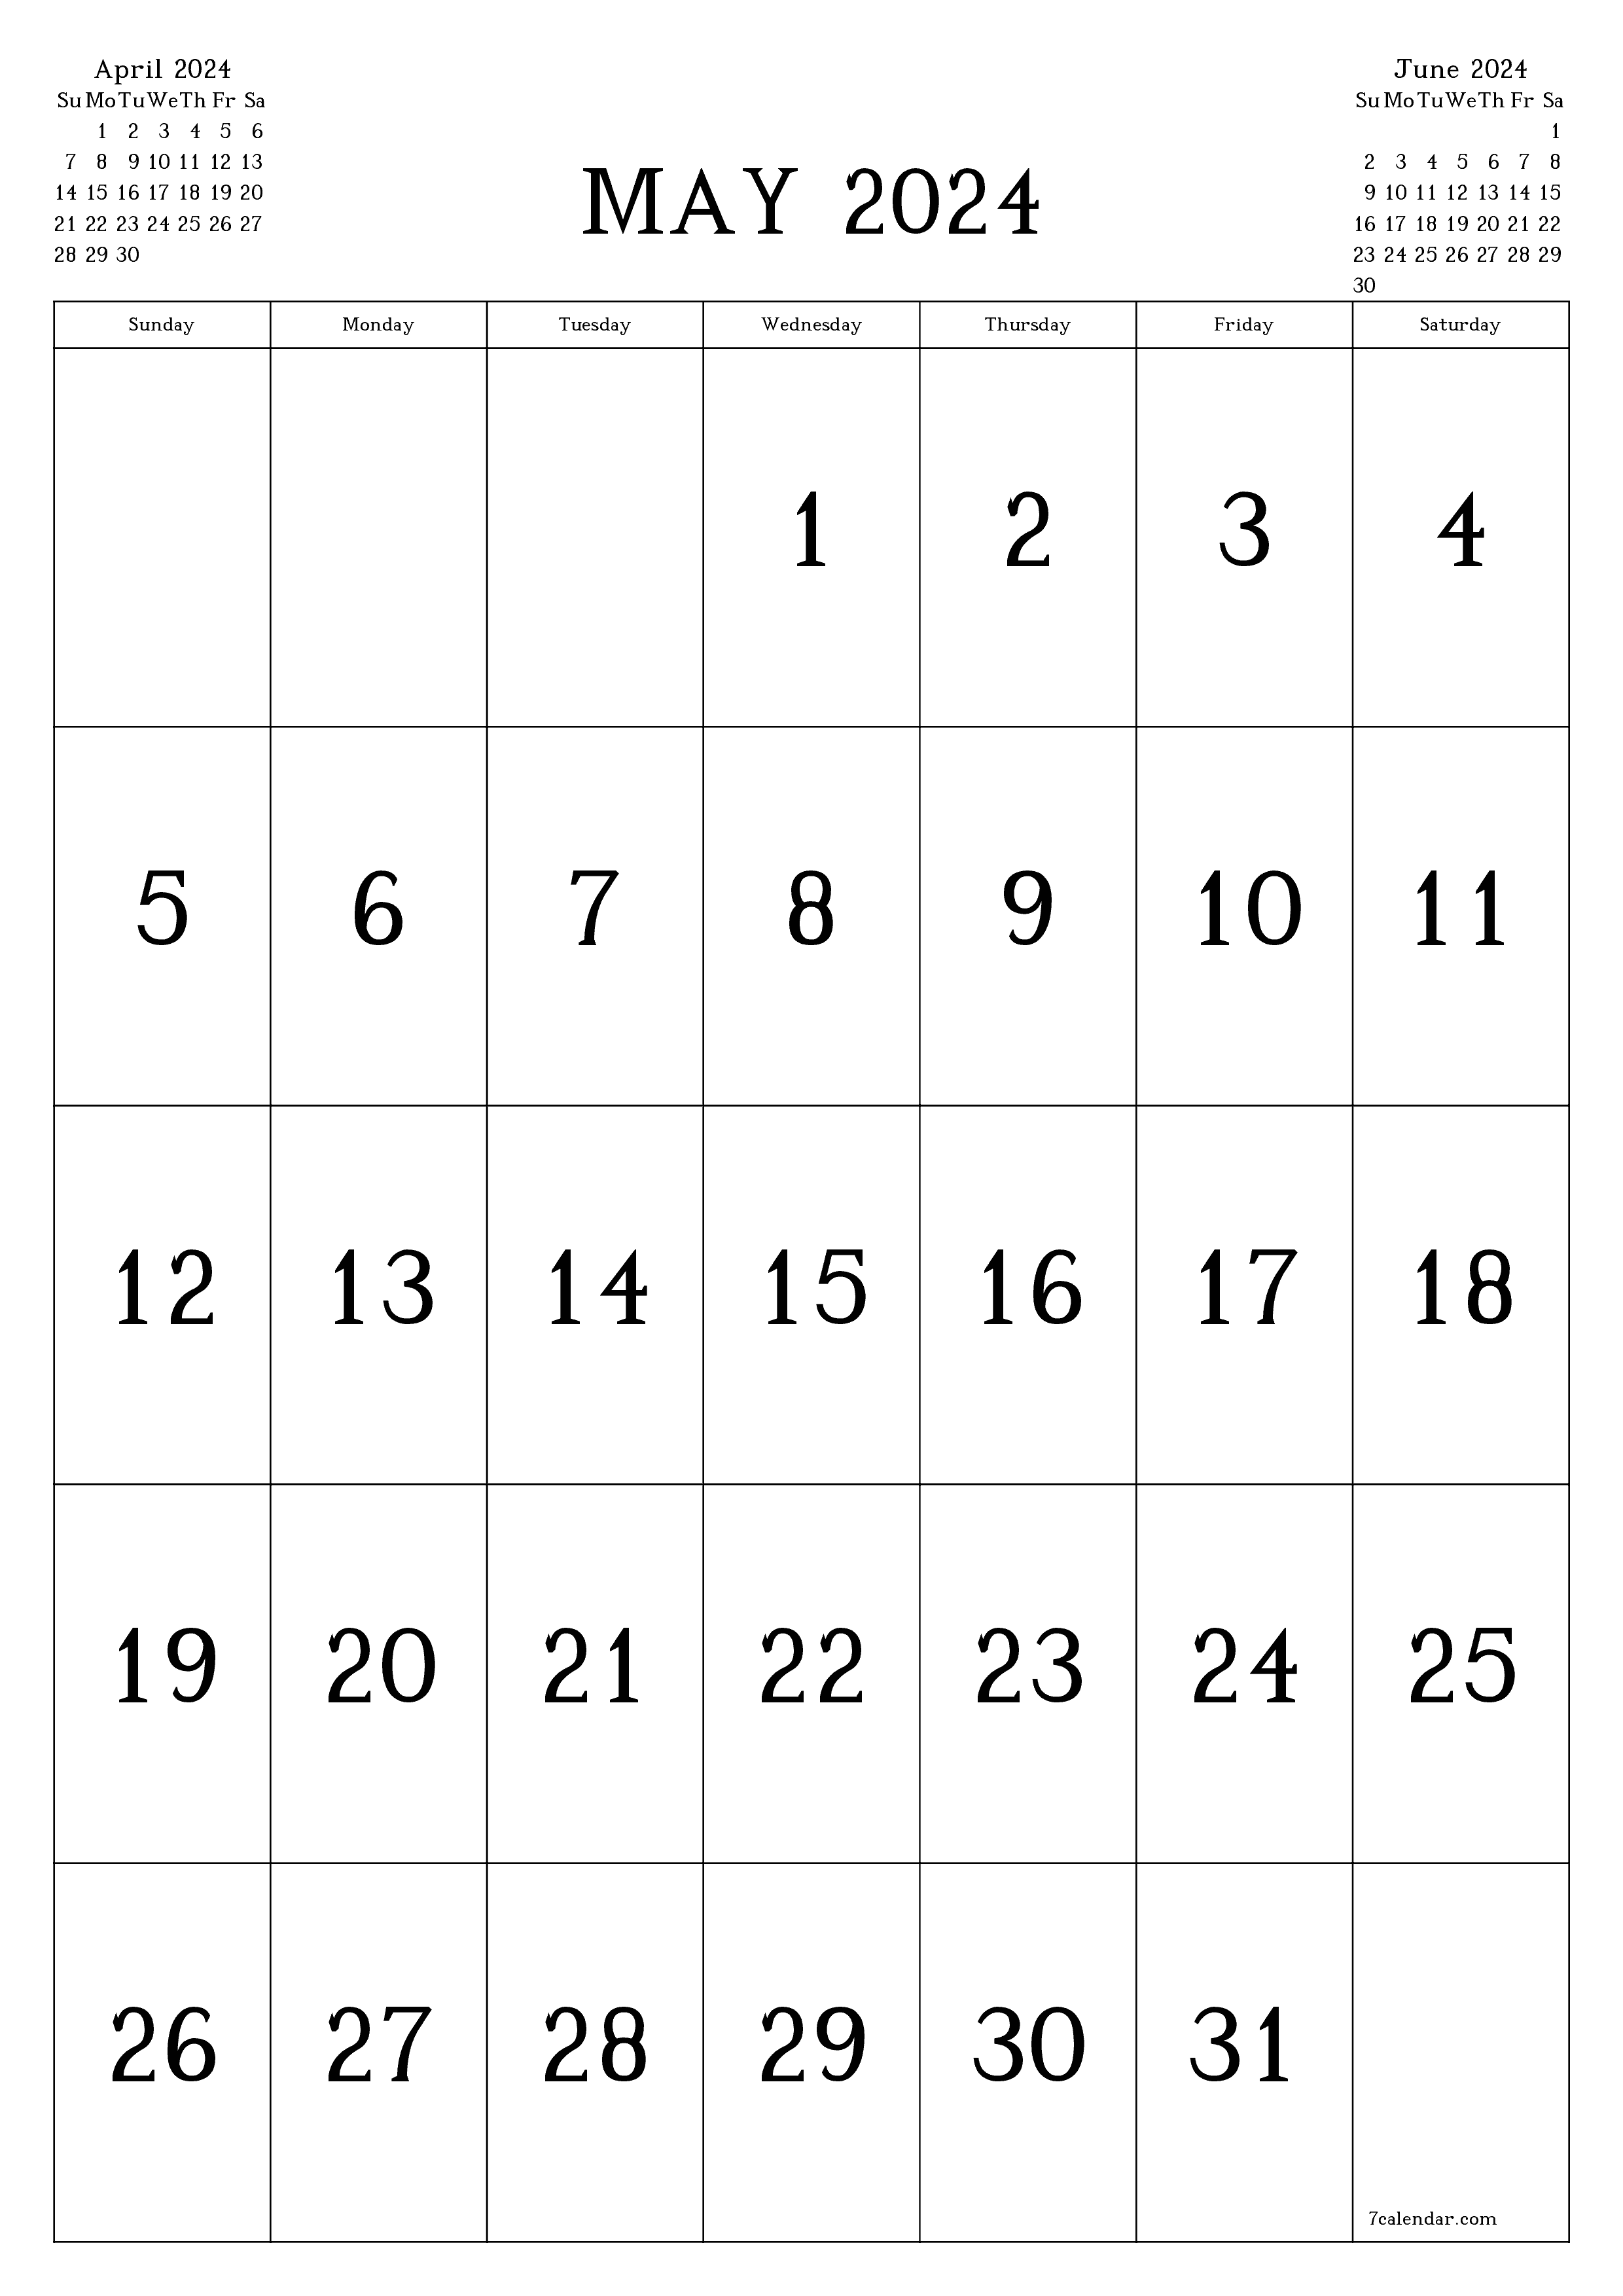 Blank calendar May 2024